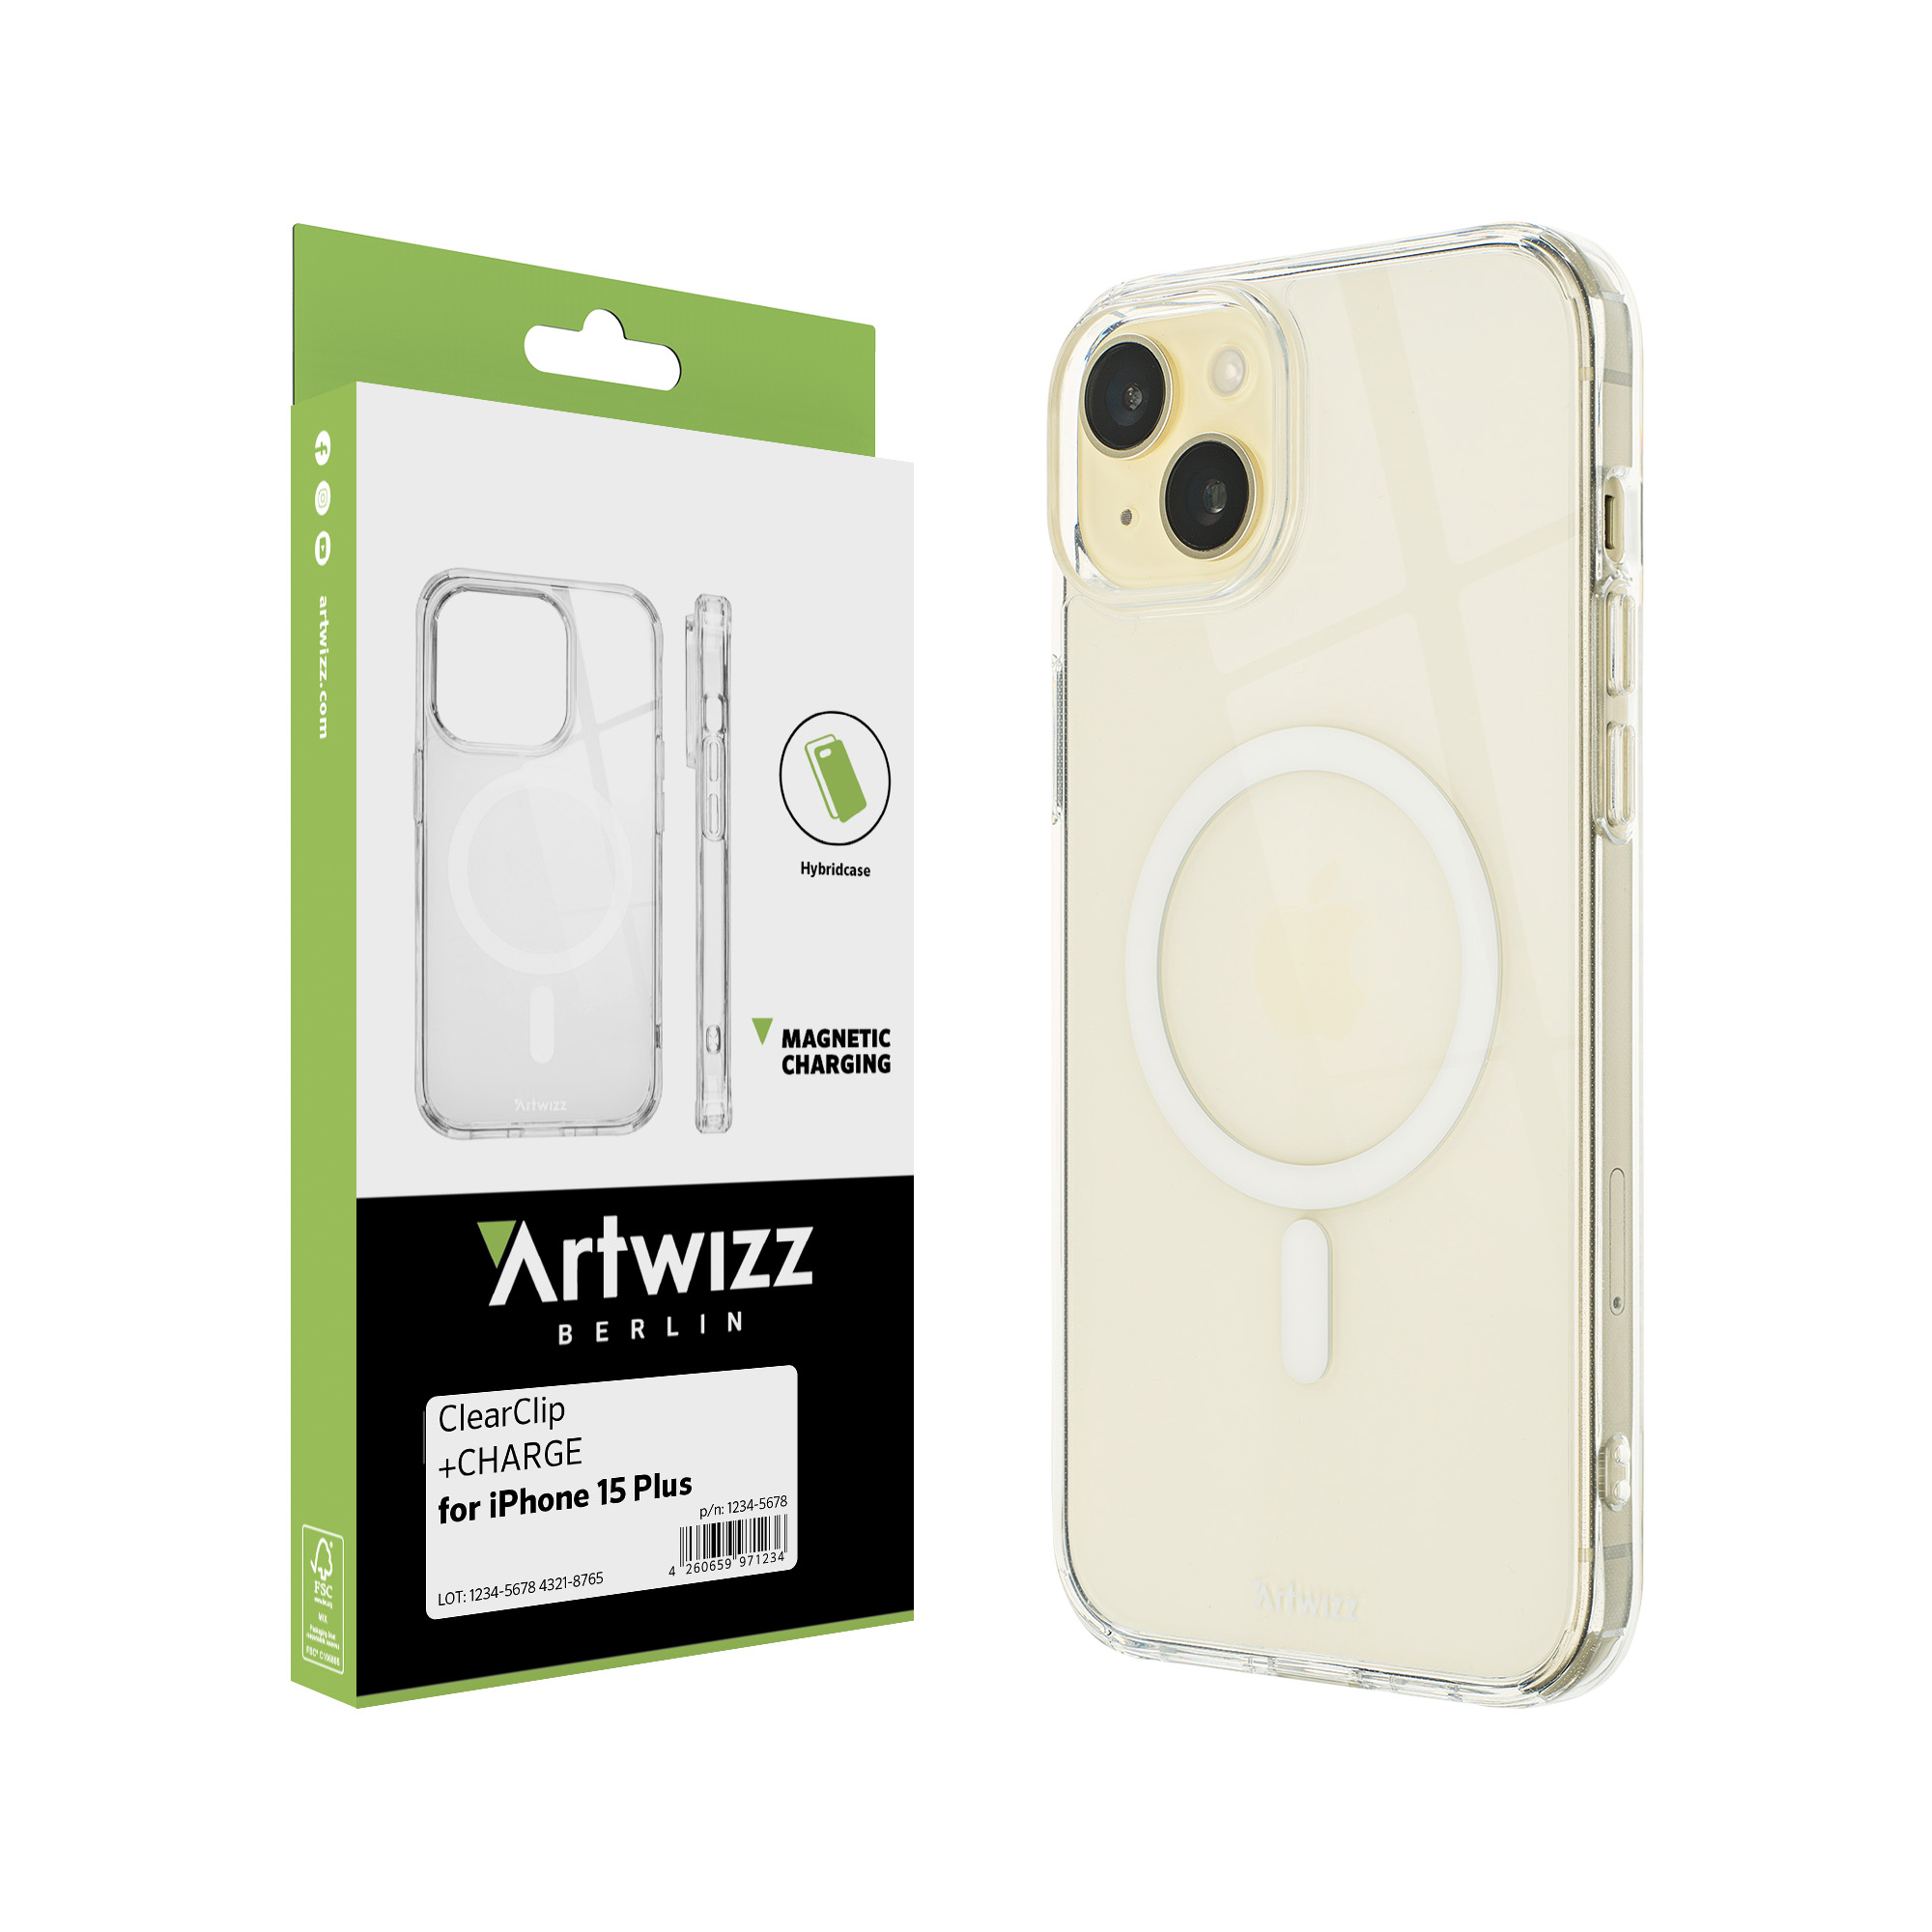 ARTWIZZ ClearClip +CHARGE, iPhone 15 Plus, Bumper, Transparent Apple